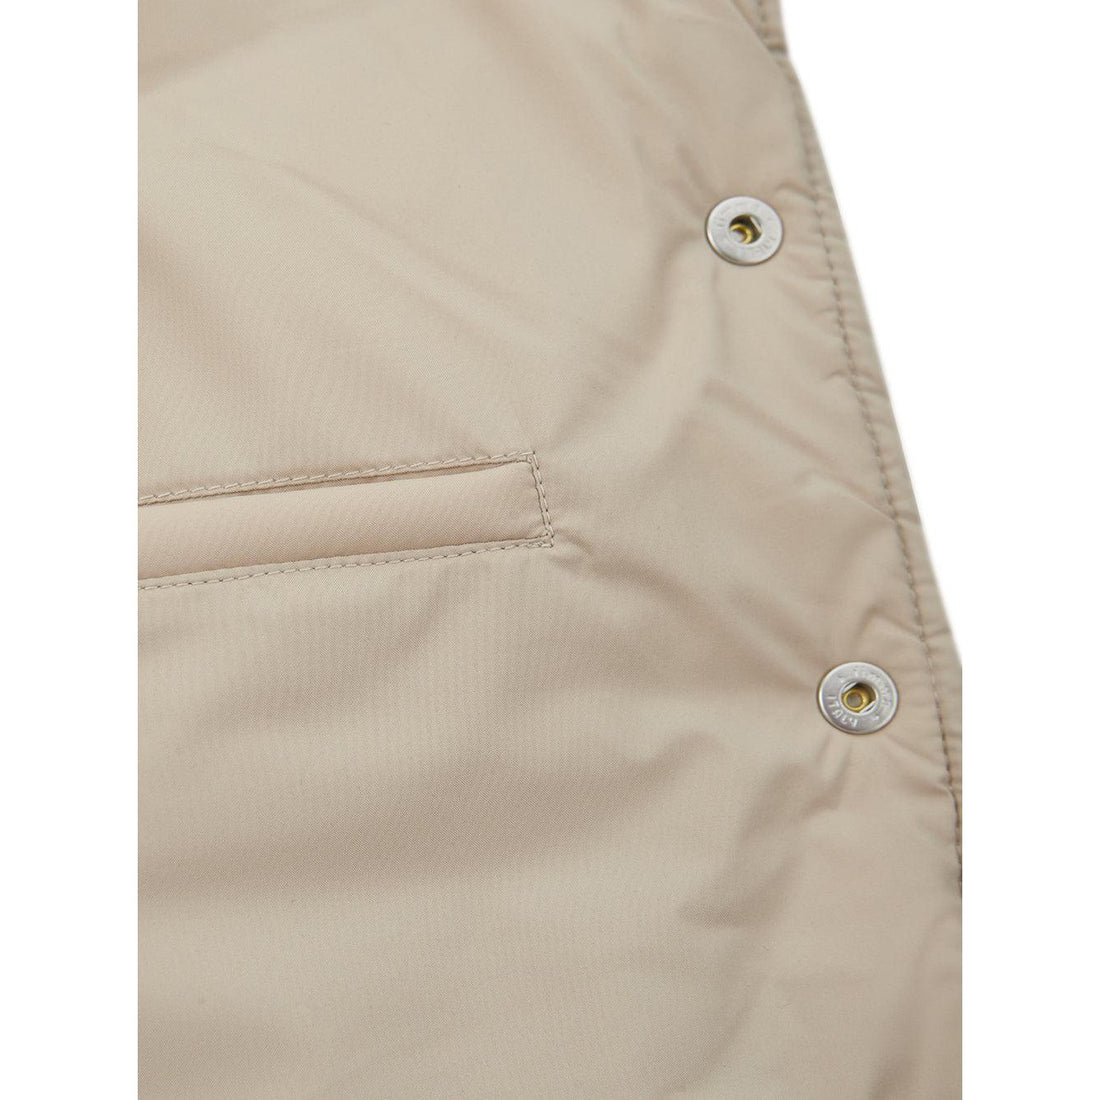 Gran Sasso Elegant Beige Quilted Vest with Eco-Leather Details